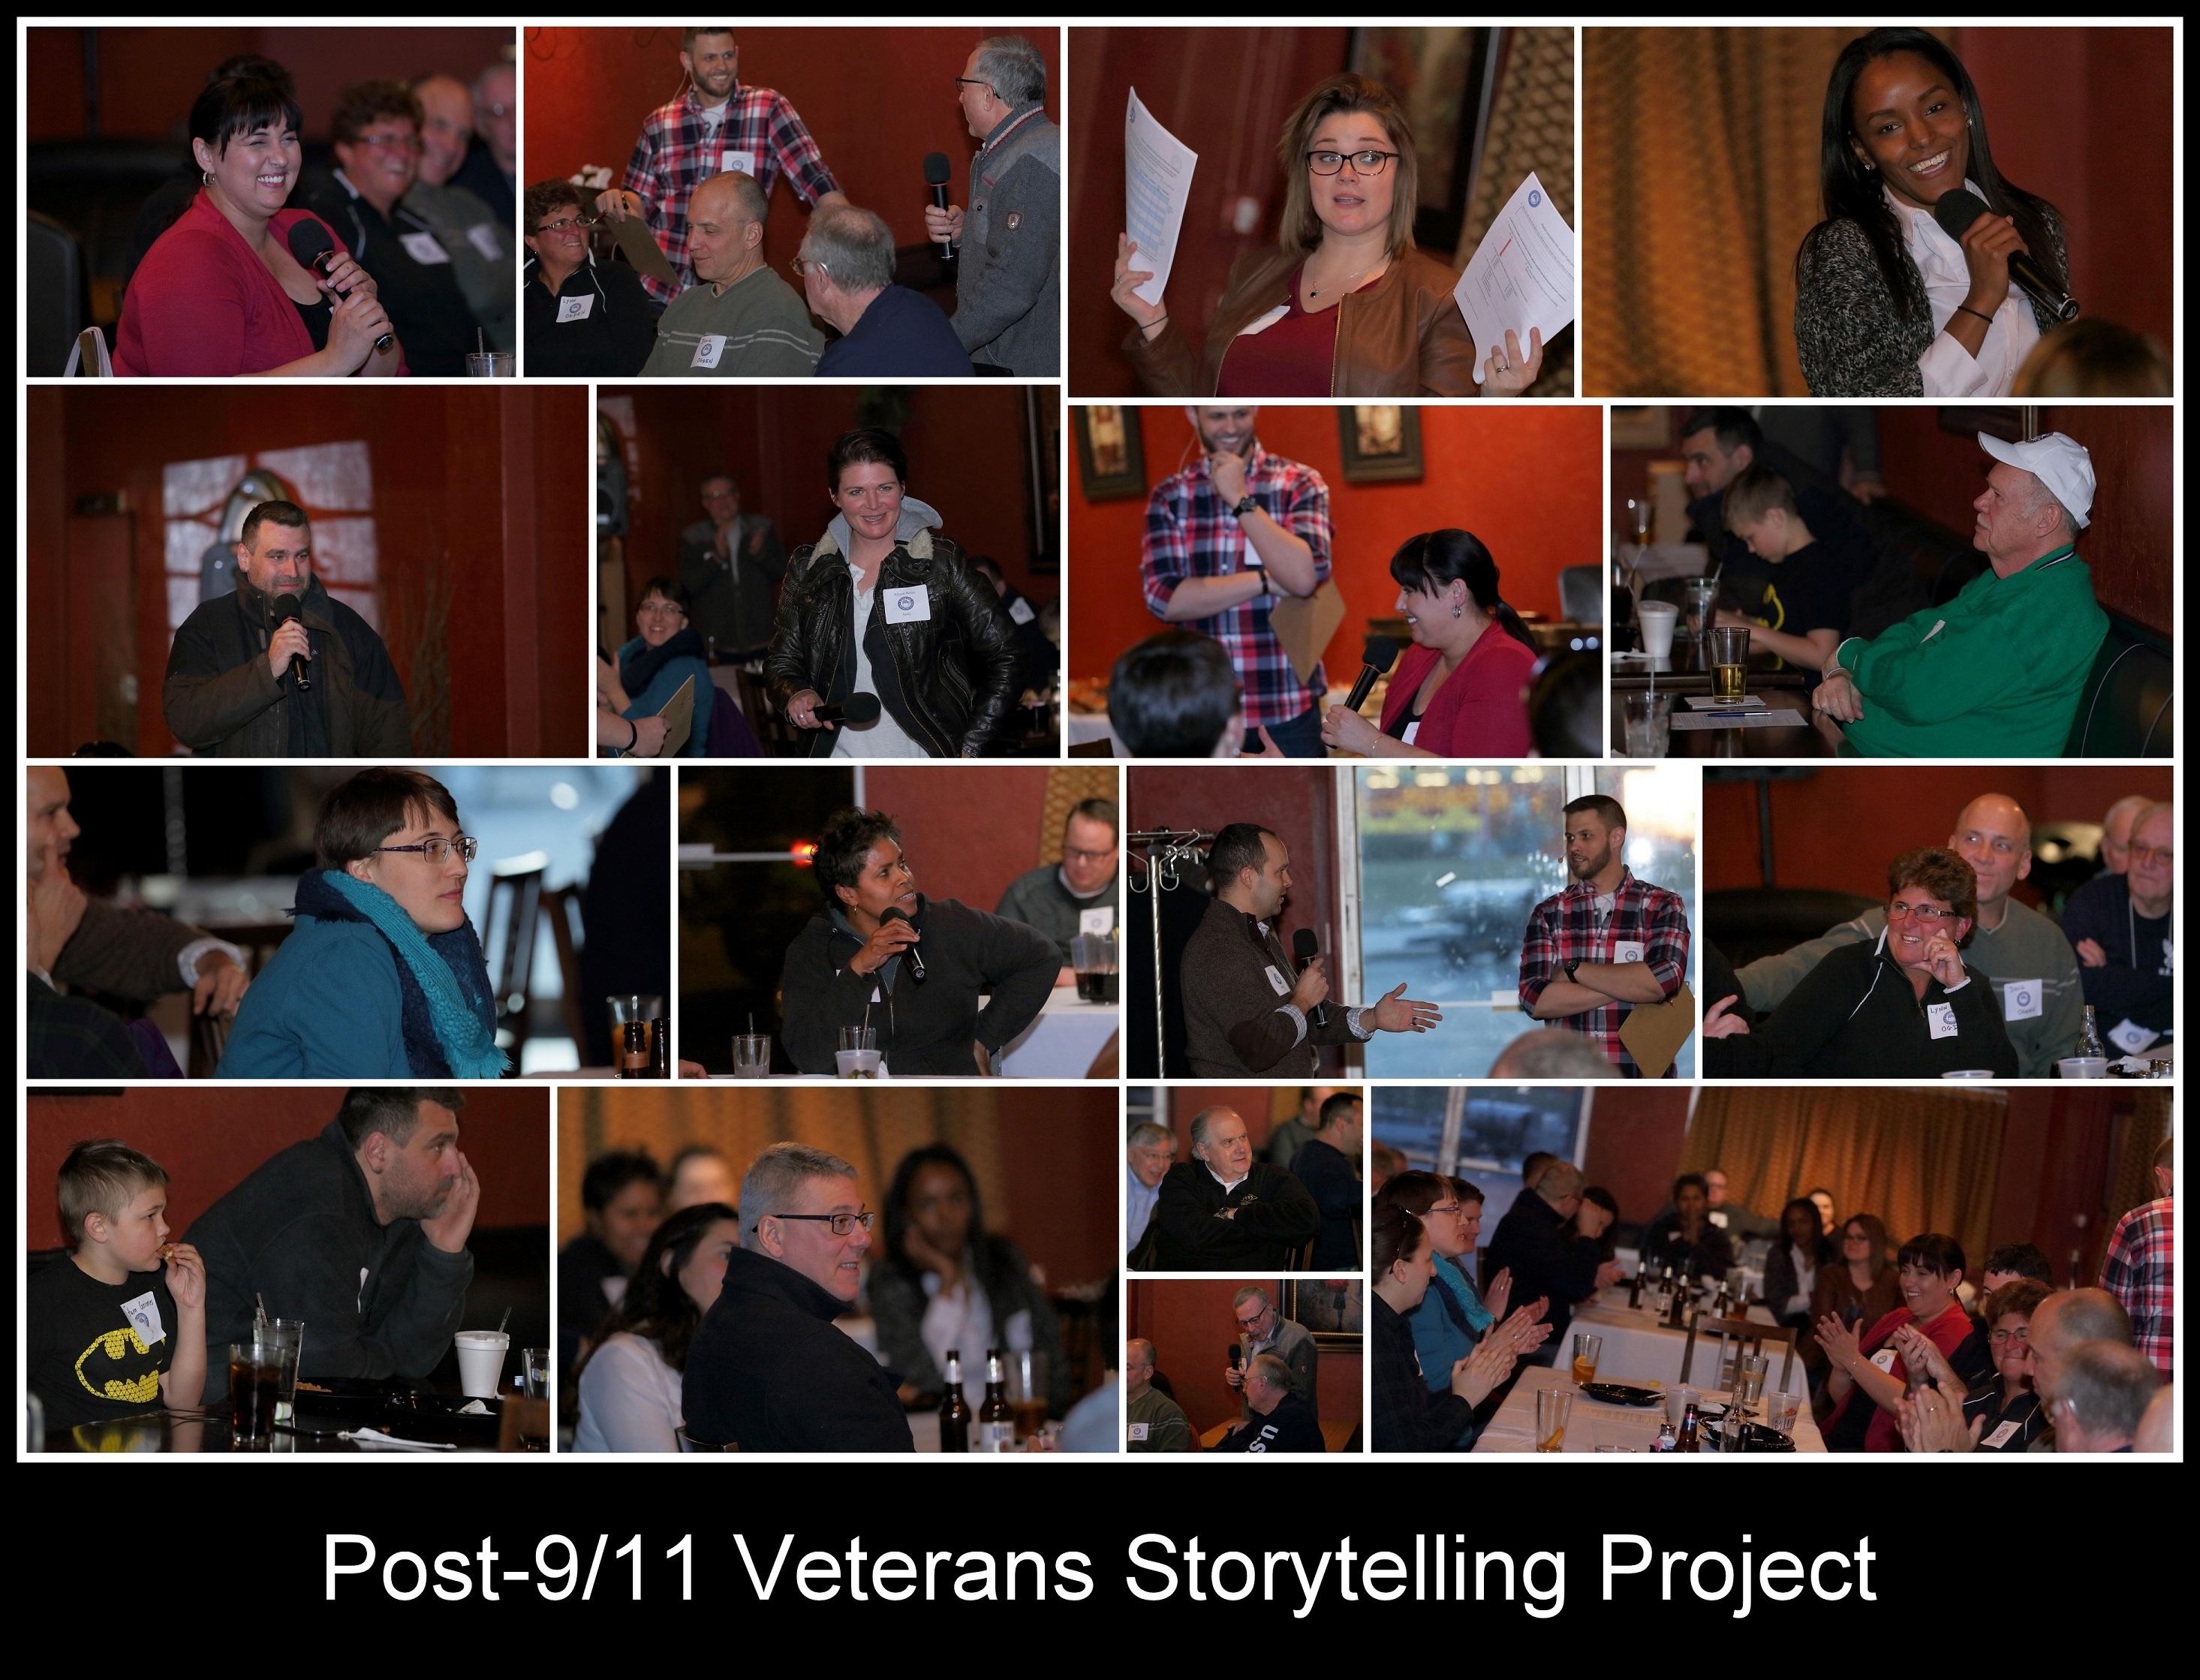 VBC Post-9/11 Veterans Event August 8th